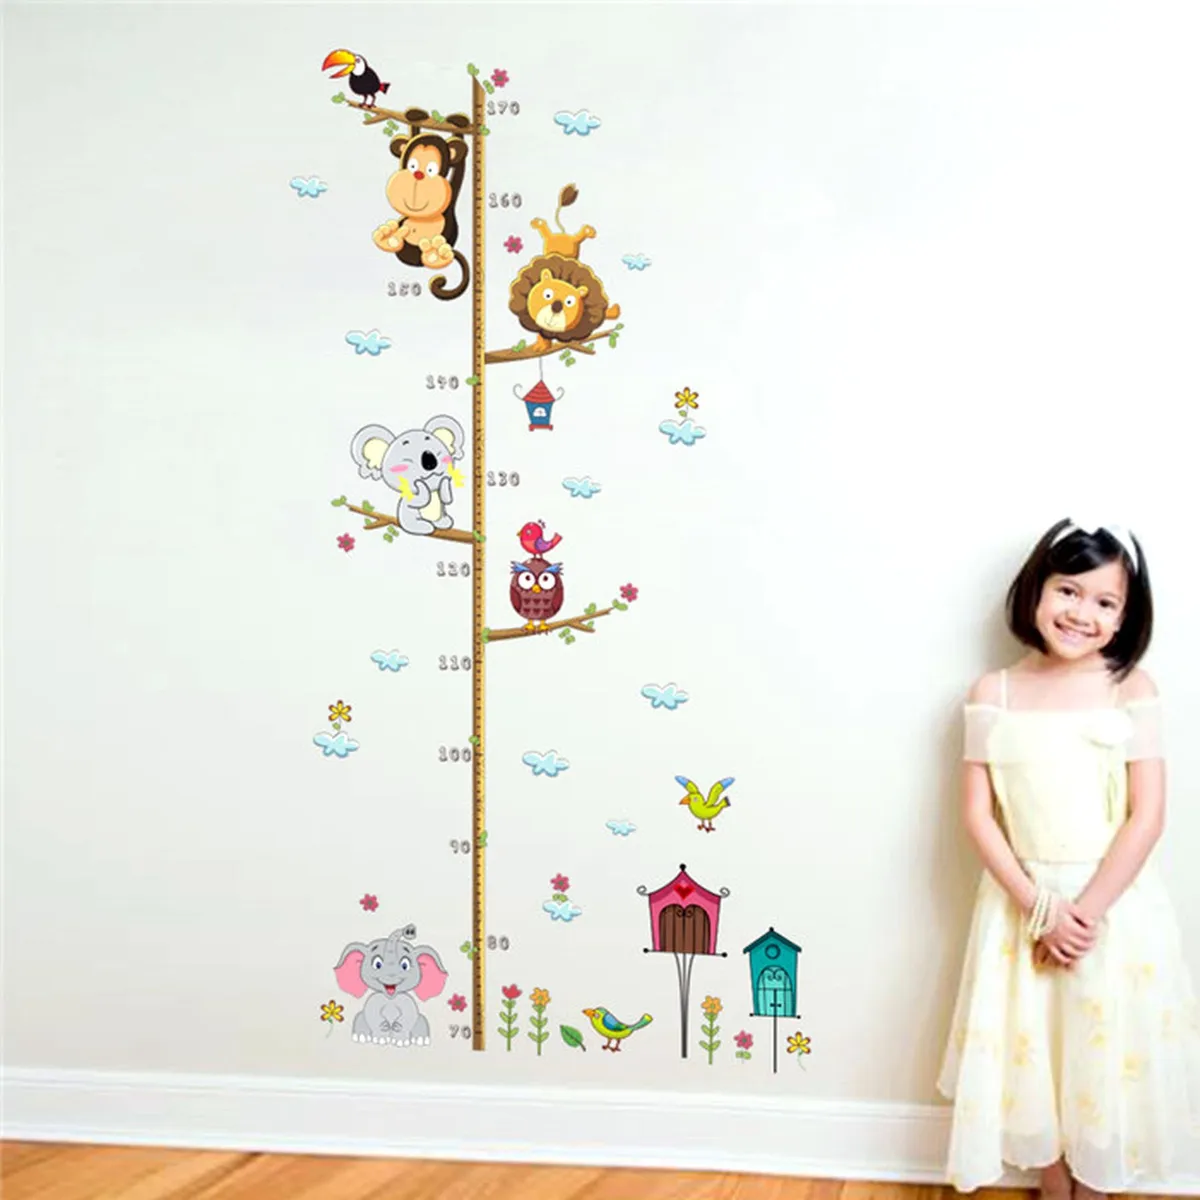 Meßlatte Kinder Kinderzimmer | Messlatte Wandsticker eBay Größe Wandtattoo messen